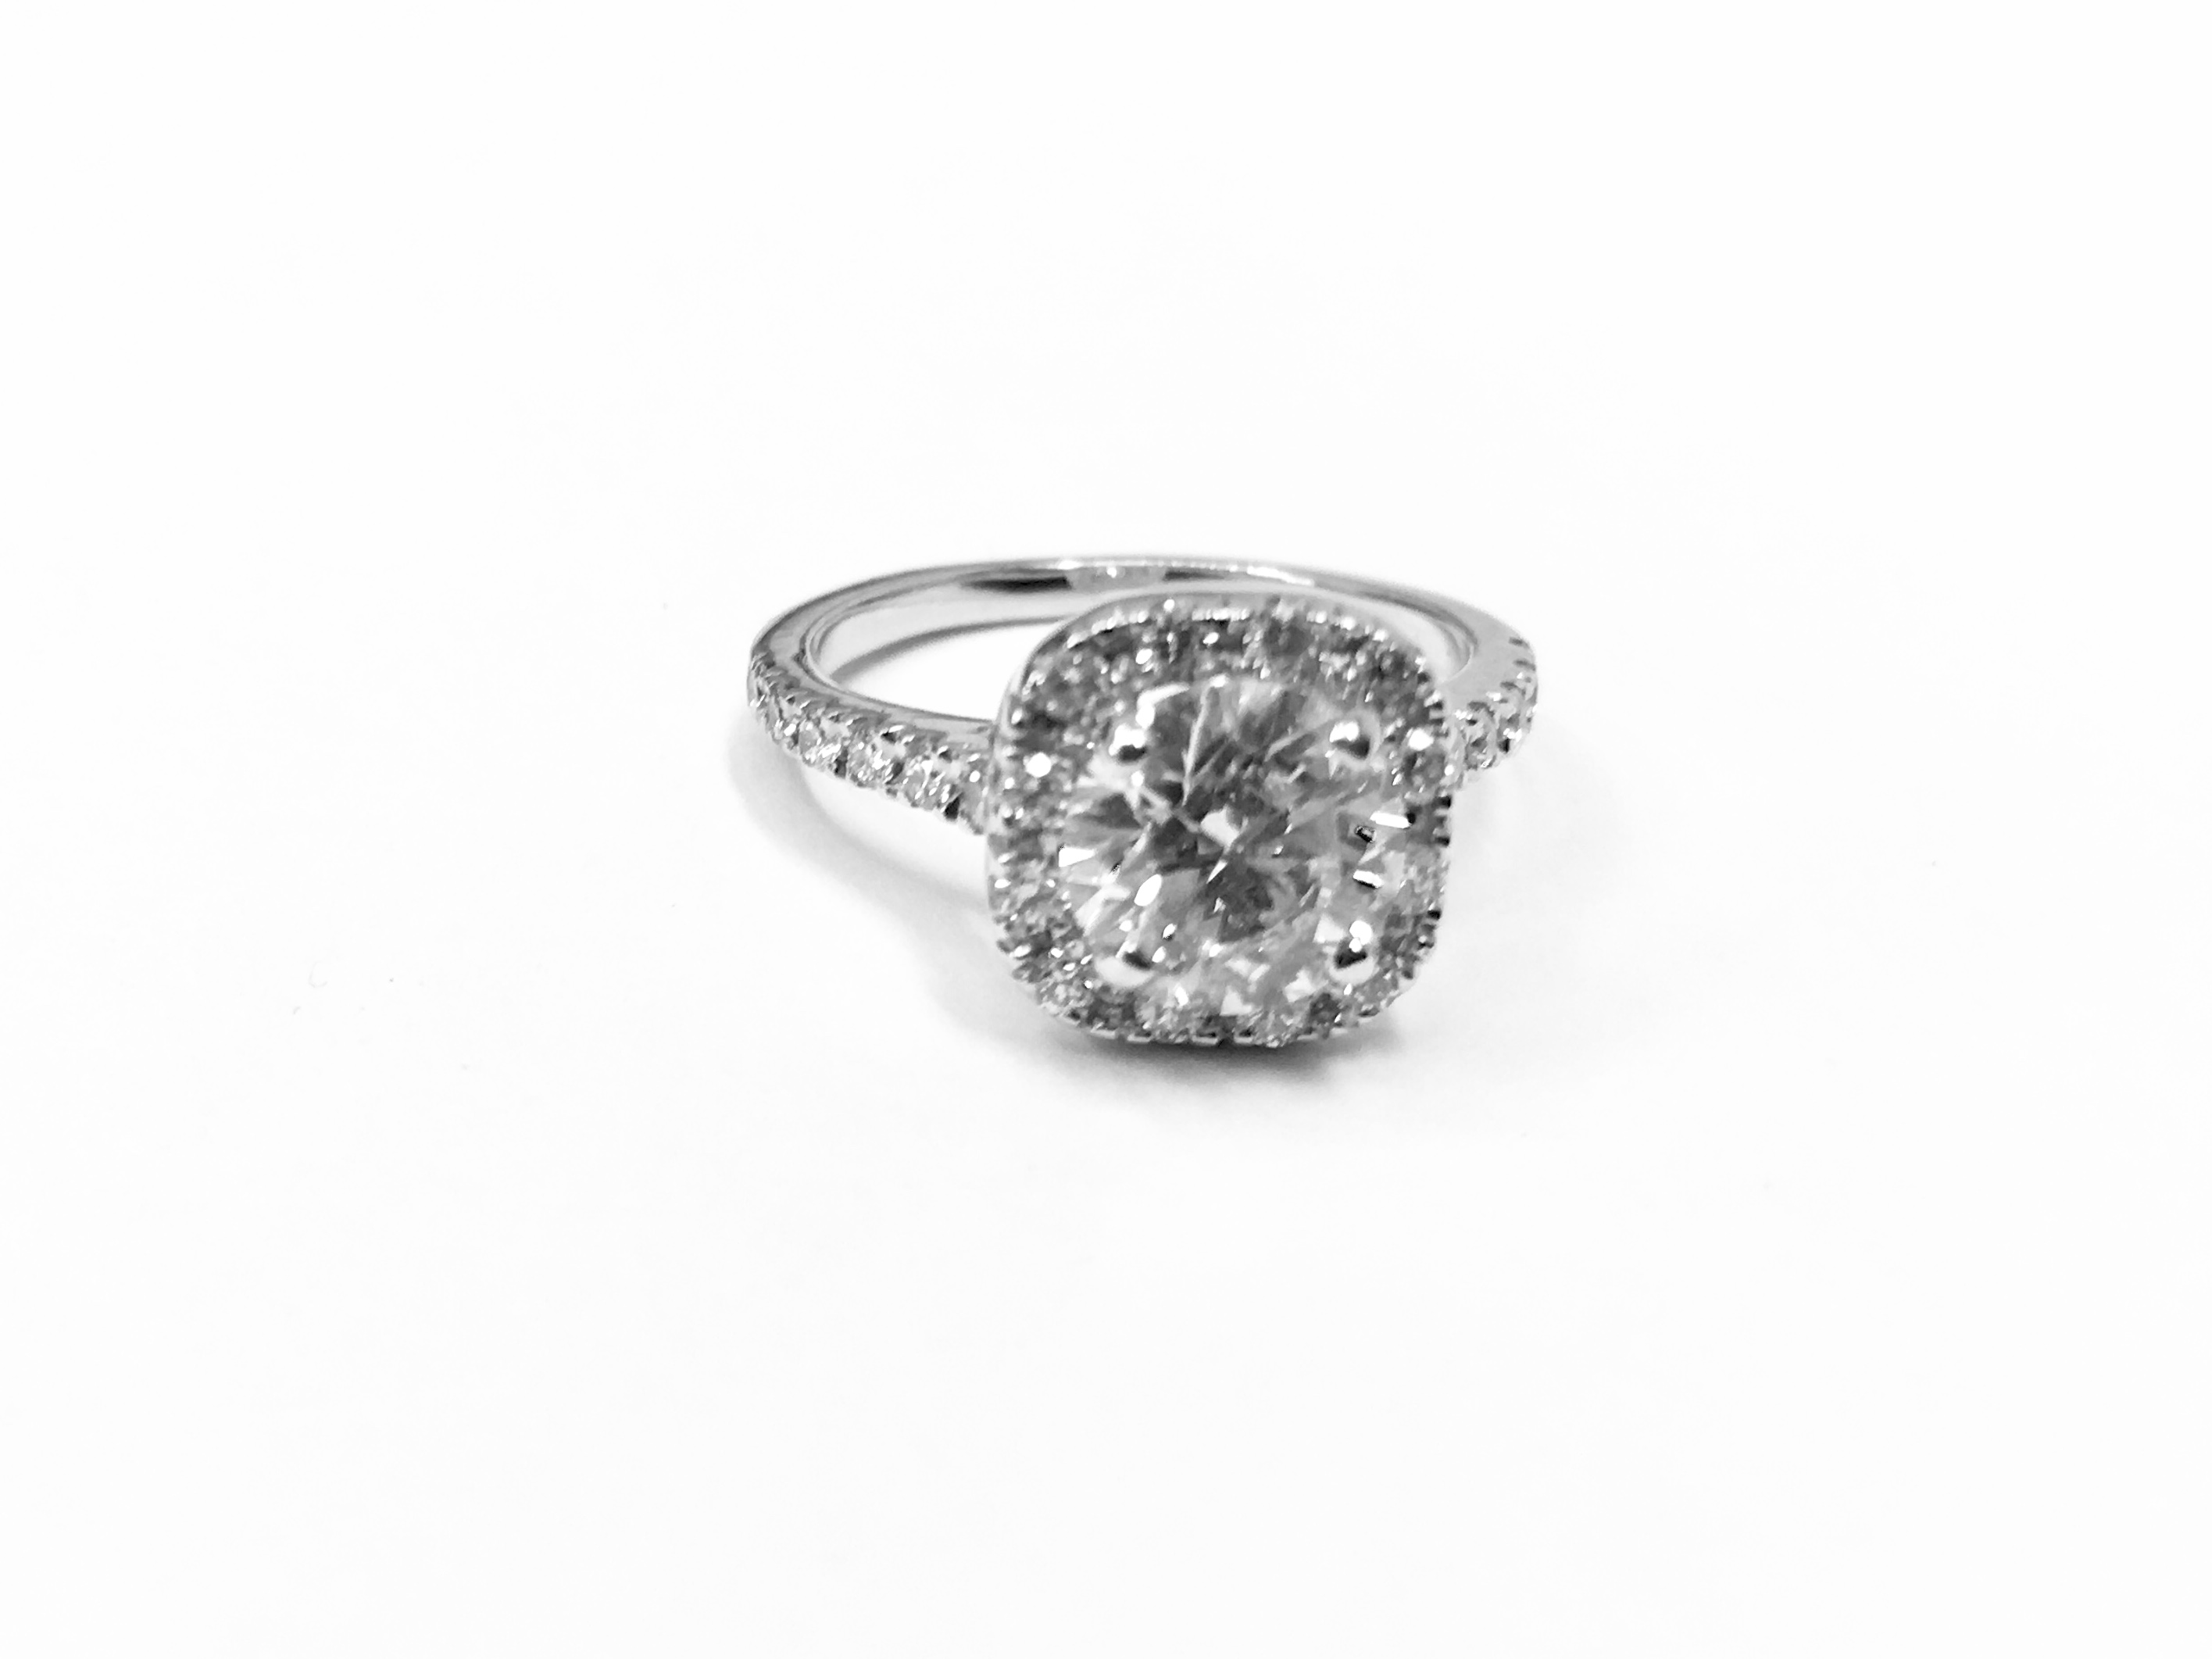 1.25ct diamond halo ring set in 18ct white gold - Image 3 of 24